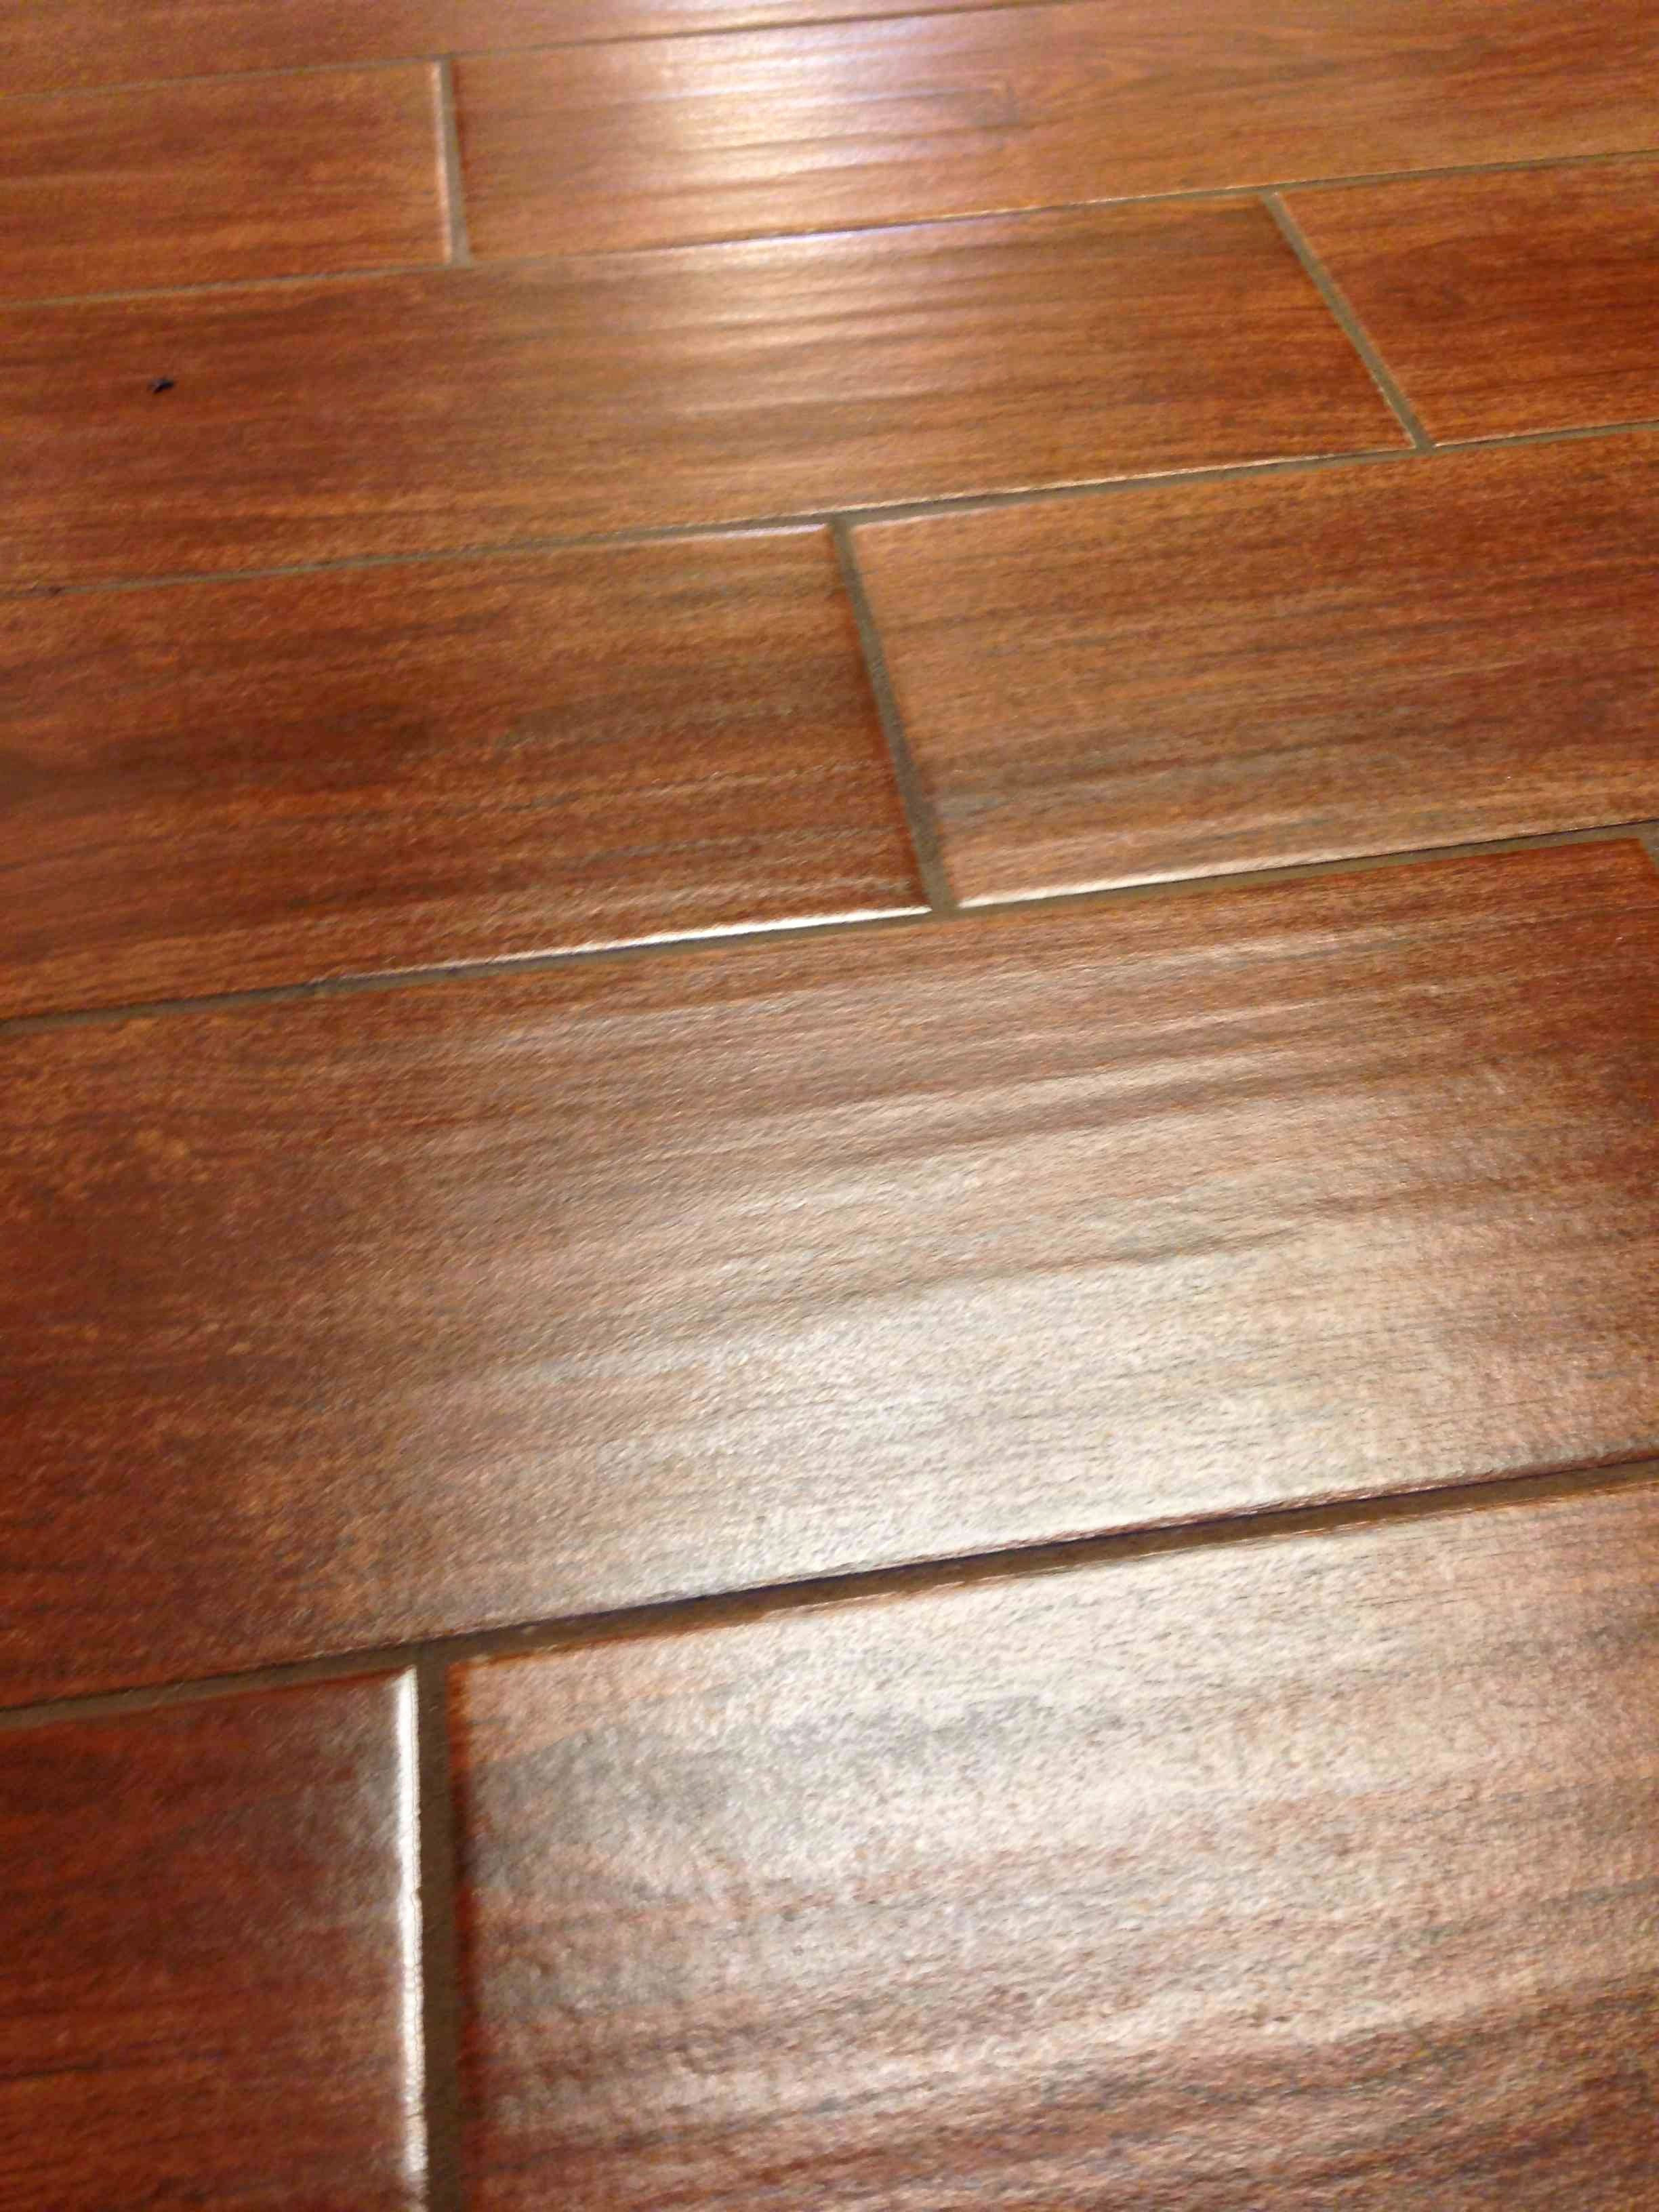 Maple Hardwood Flooring Prices Of 19 New Cheapest Hardwood Flooring Photograph Dizpos Com Throughout Cheapest Hardwood Flooring Awesome wholesale Hardwood Flooring Nj where to Buy Hardwood Flooring Stock Of 19